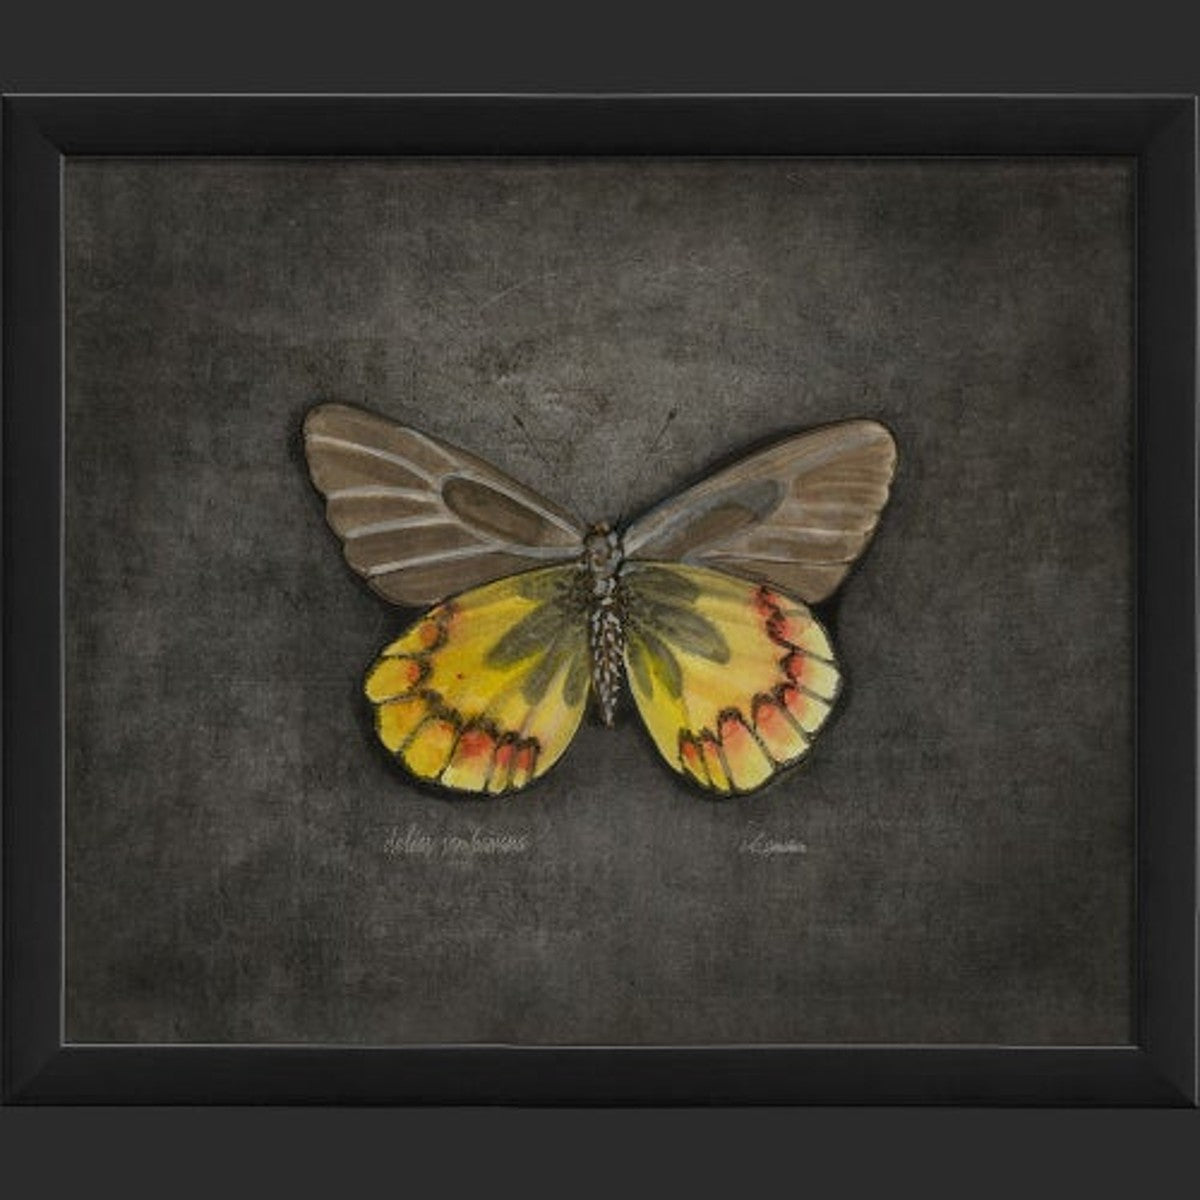 Framed Butterfly Print - Delias Sambawana